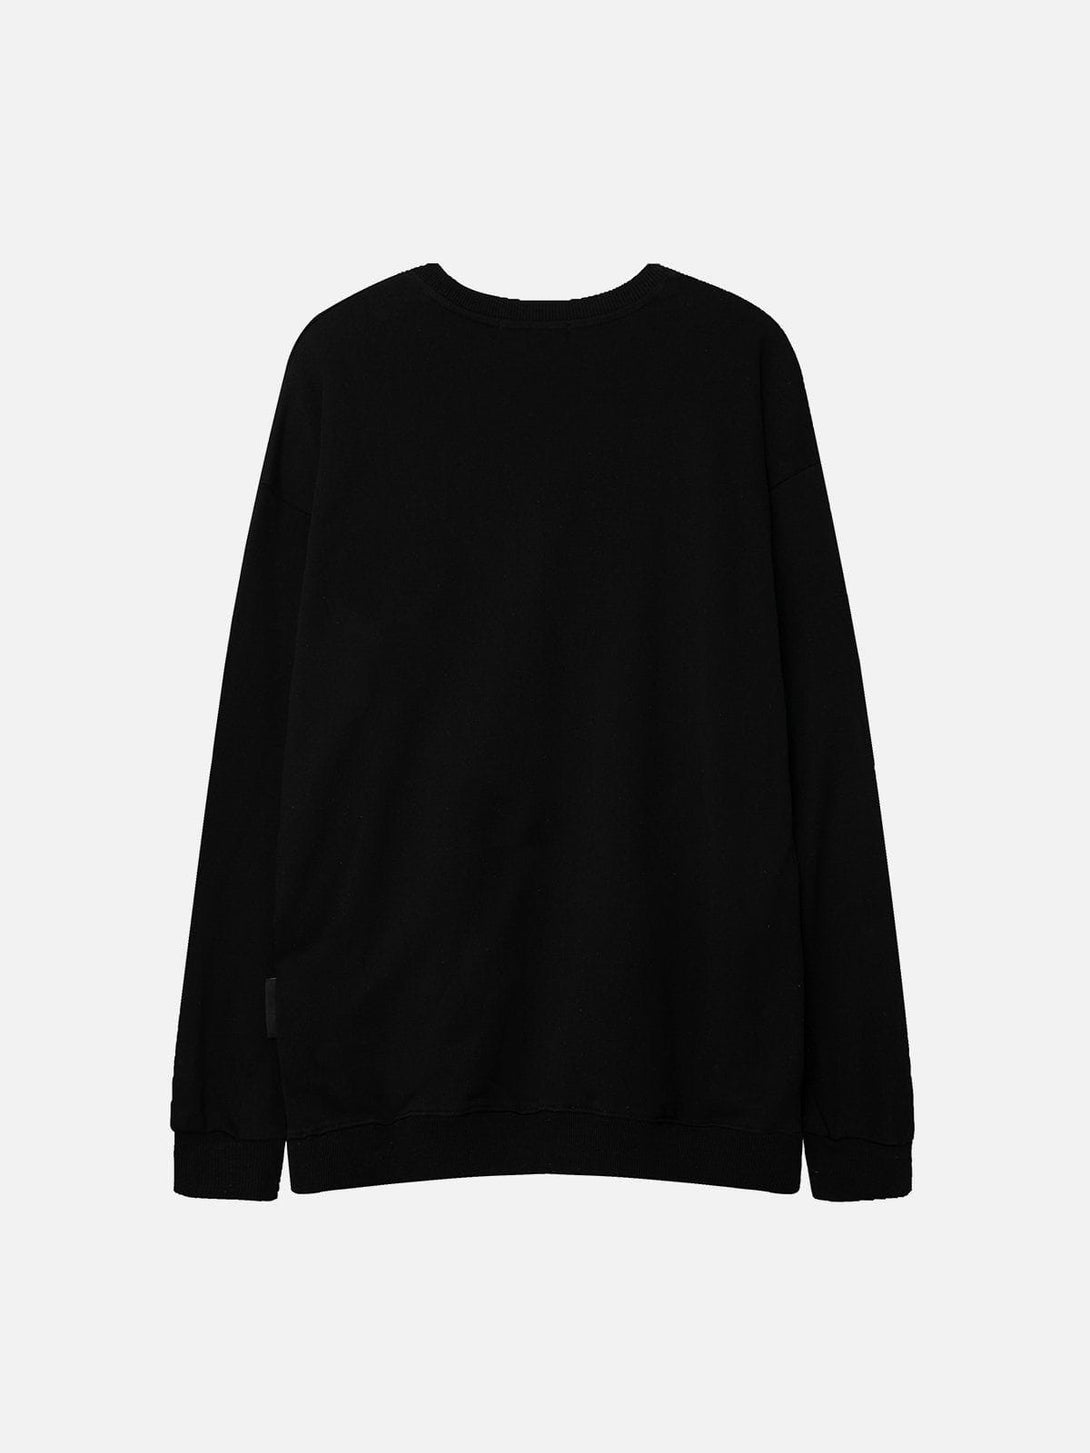 Majesda® - Gradient Letter Embroidery Sweatshirt outfit ideas streetwear fashion